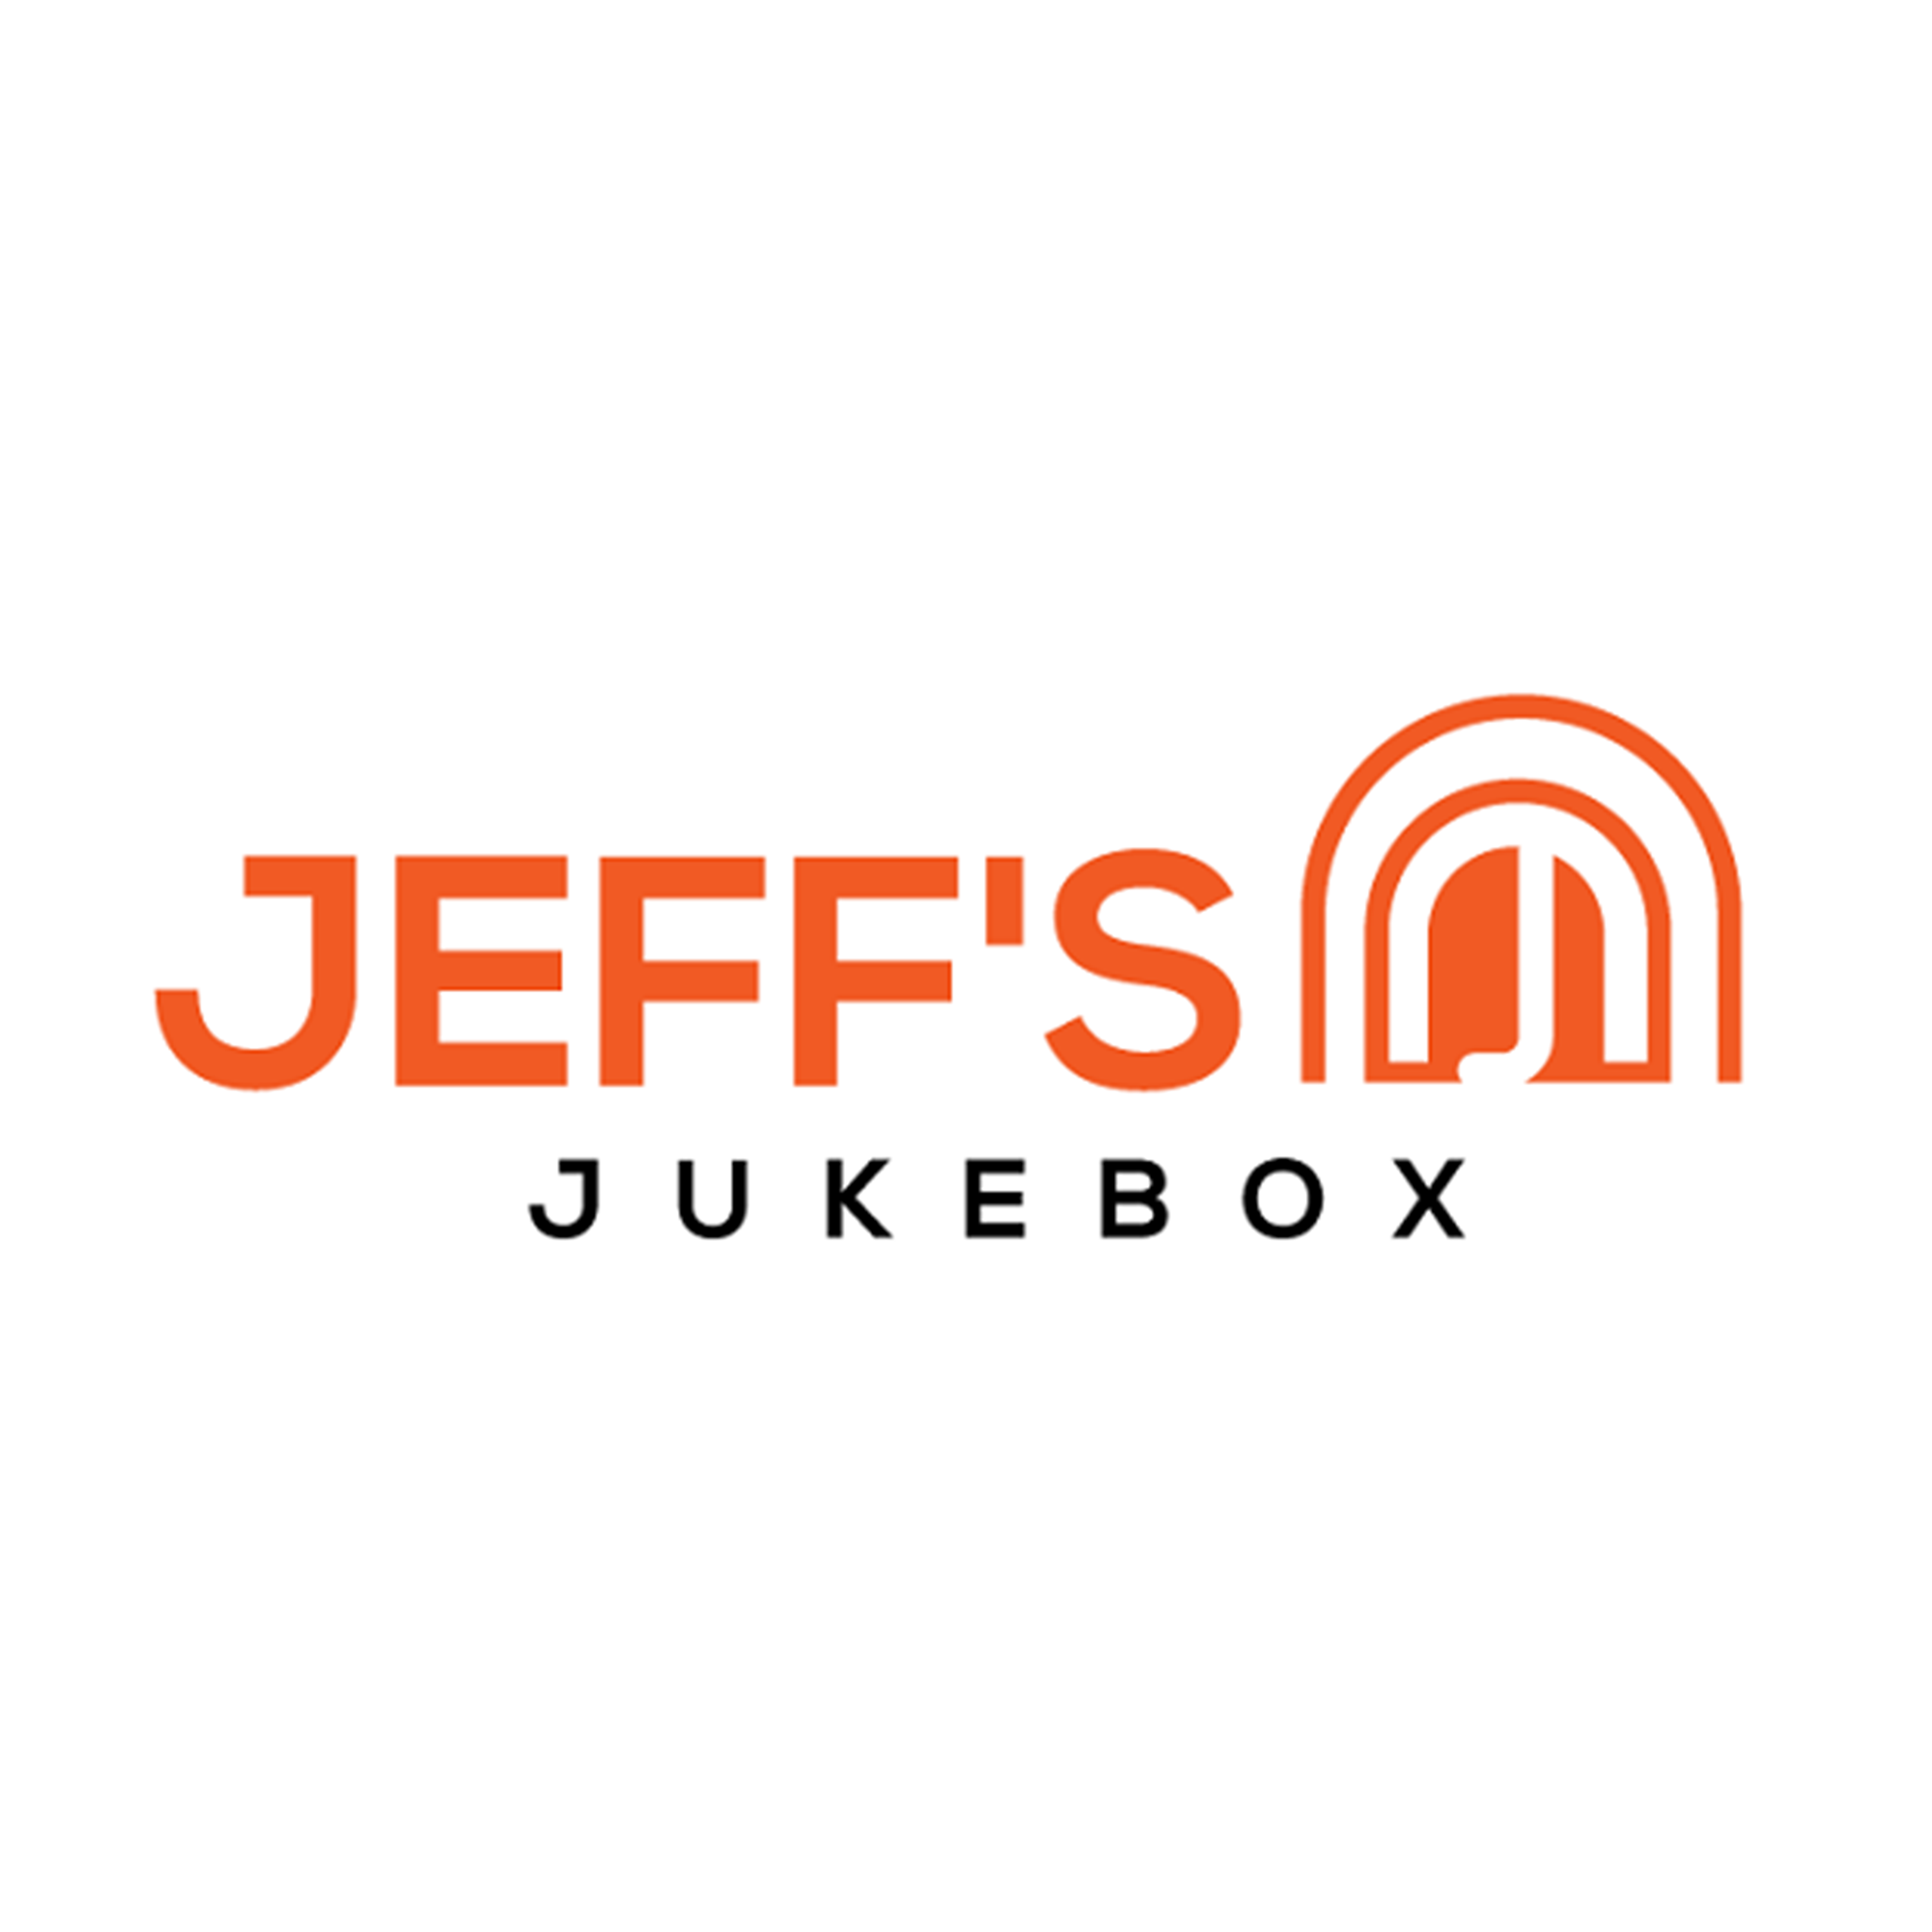 Jeff's Jukebox